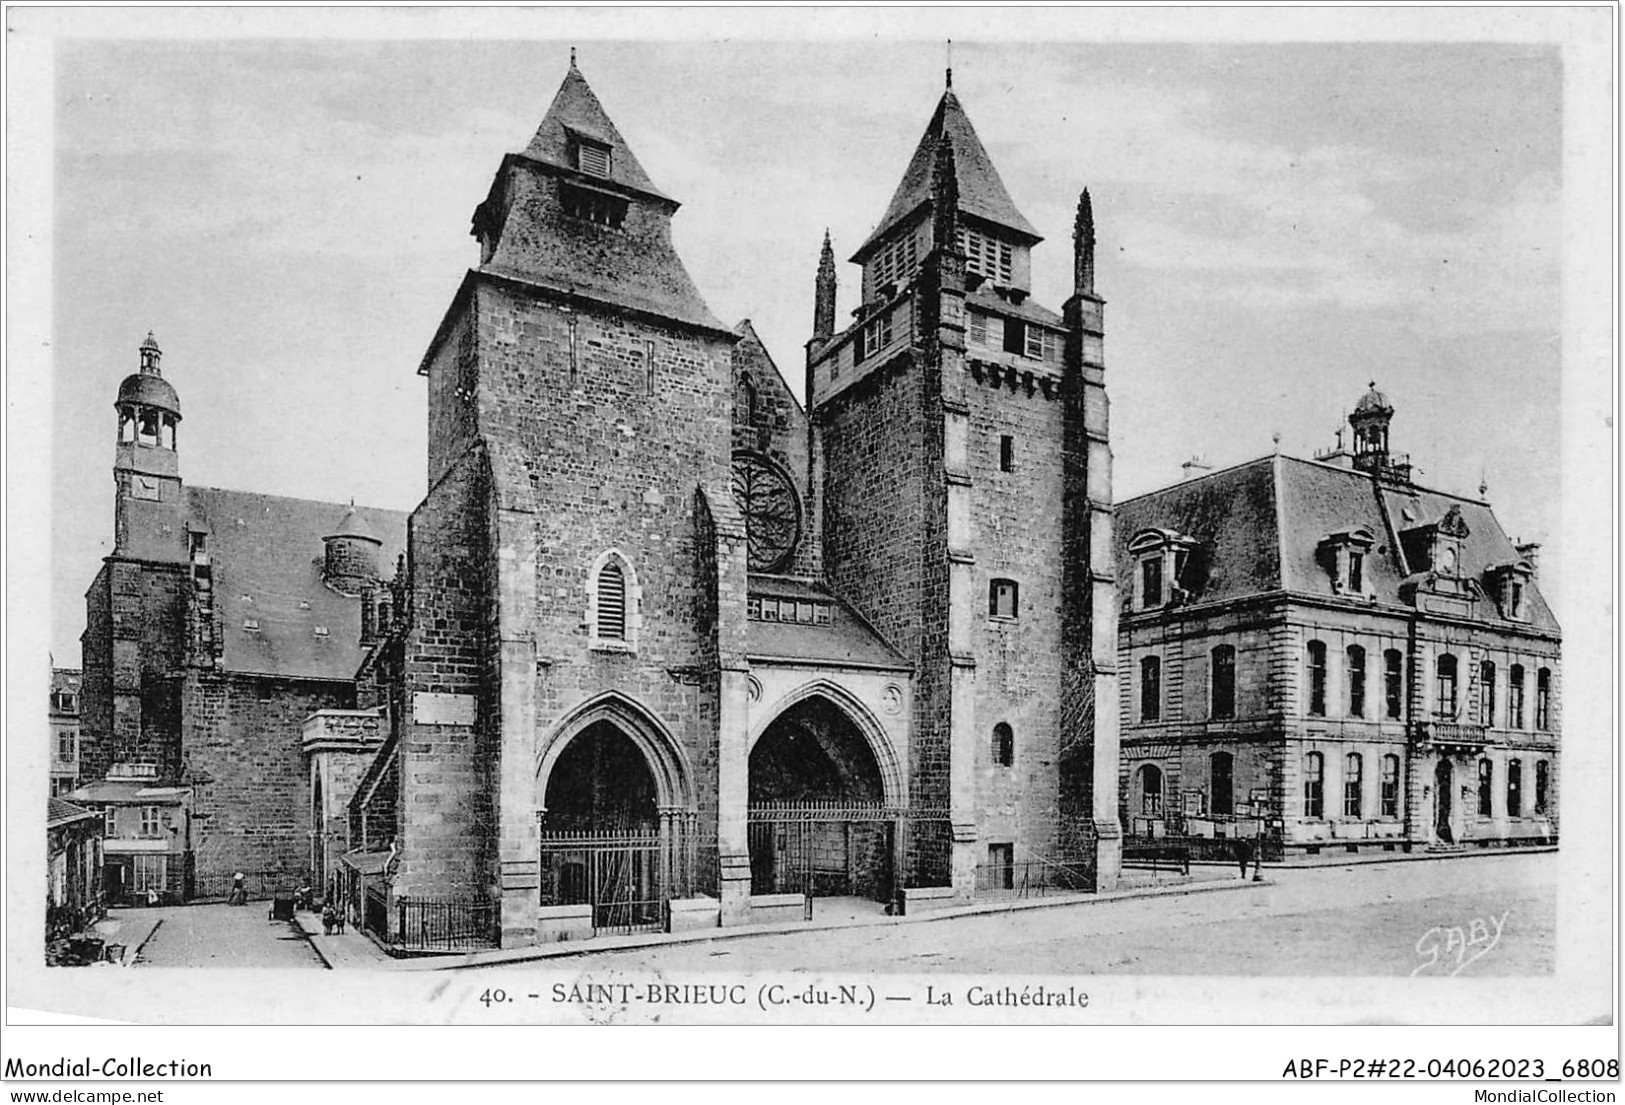 ABFP2-22-0109 - SAINT-BRIEUC - La Cathedrale - Saint-Brieuc